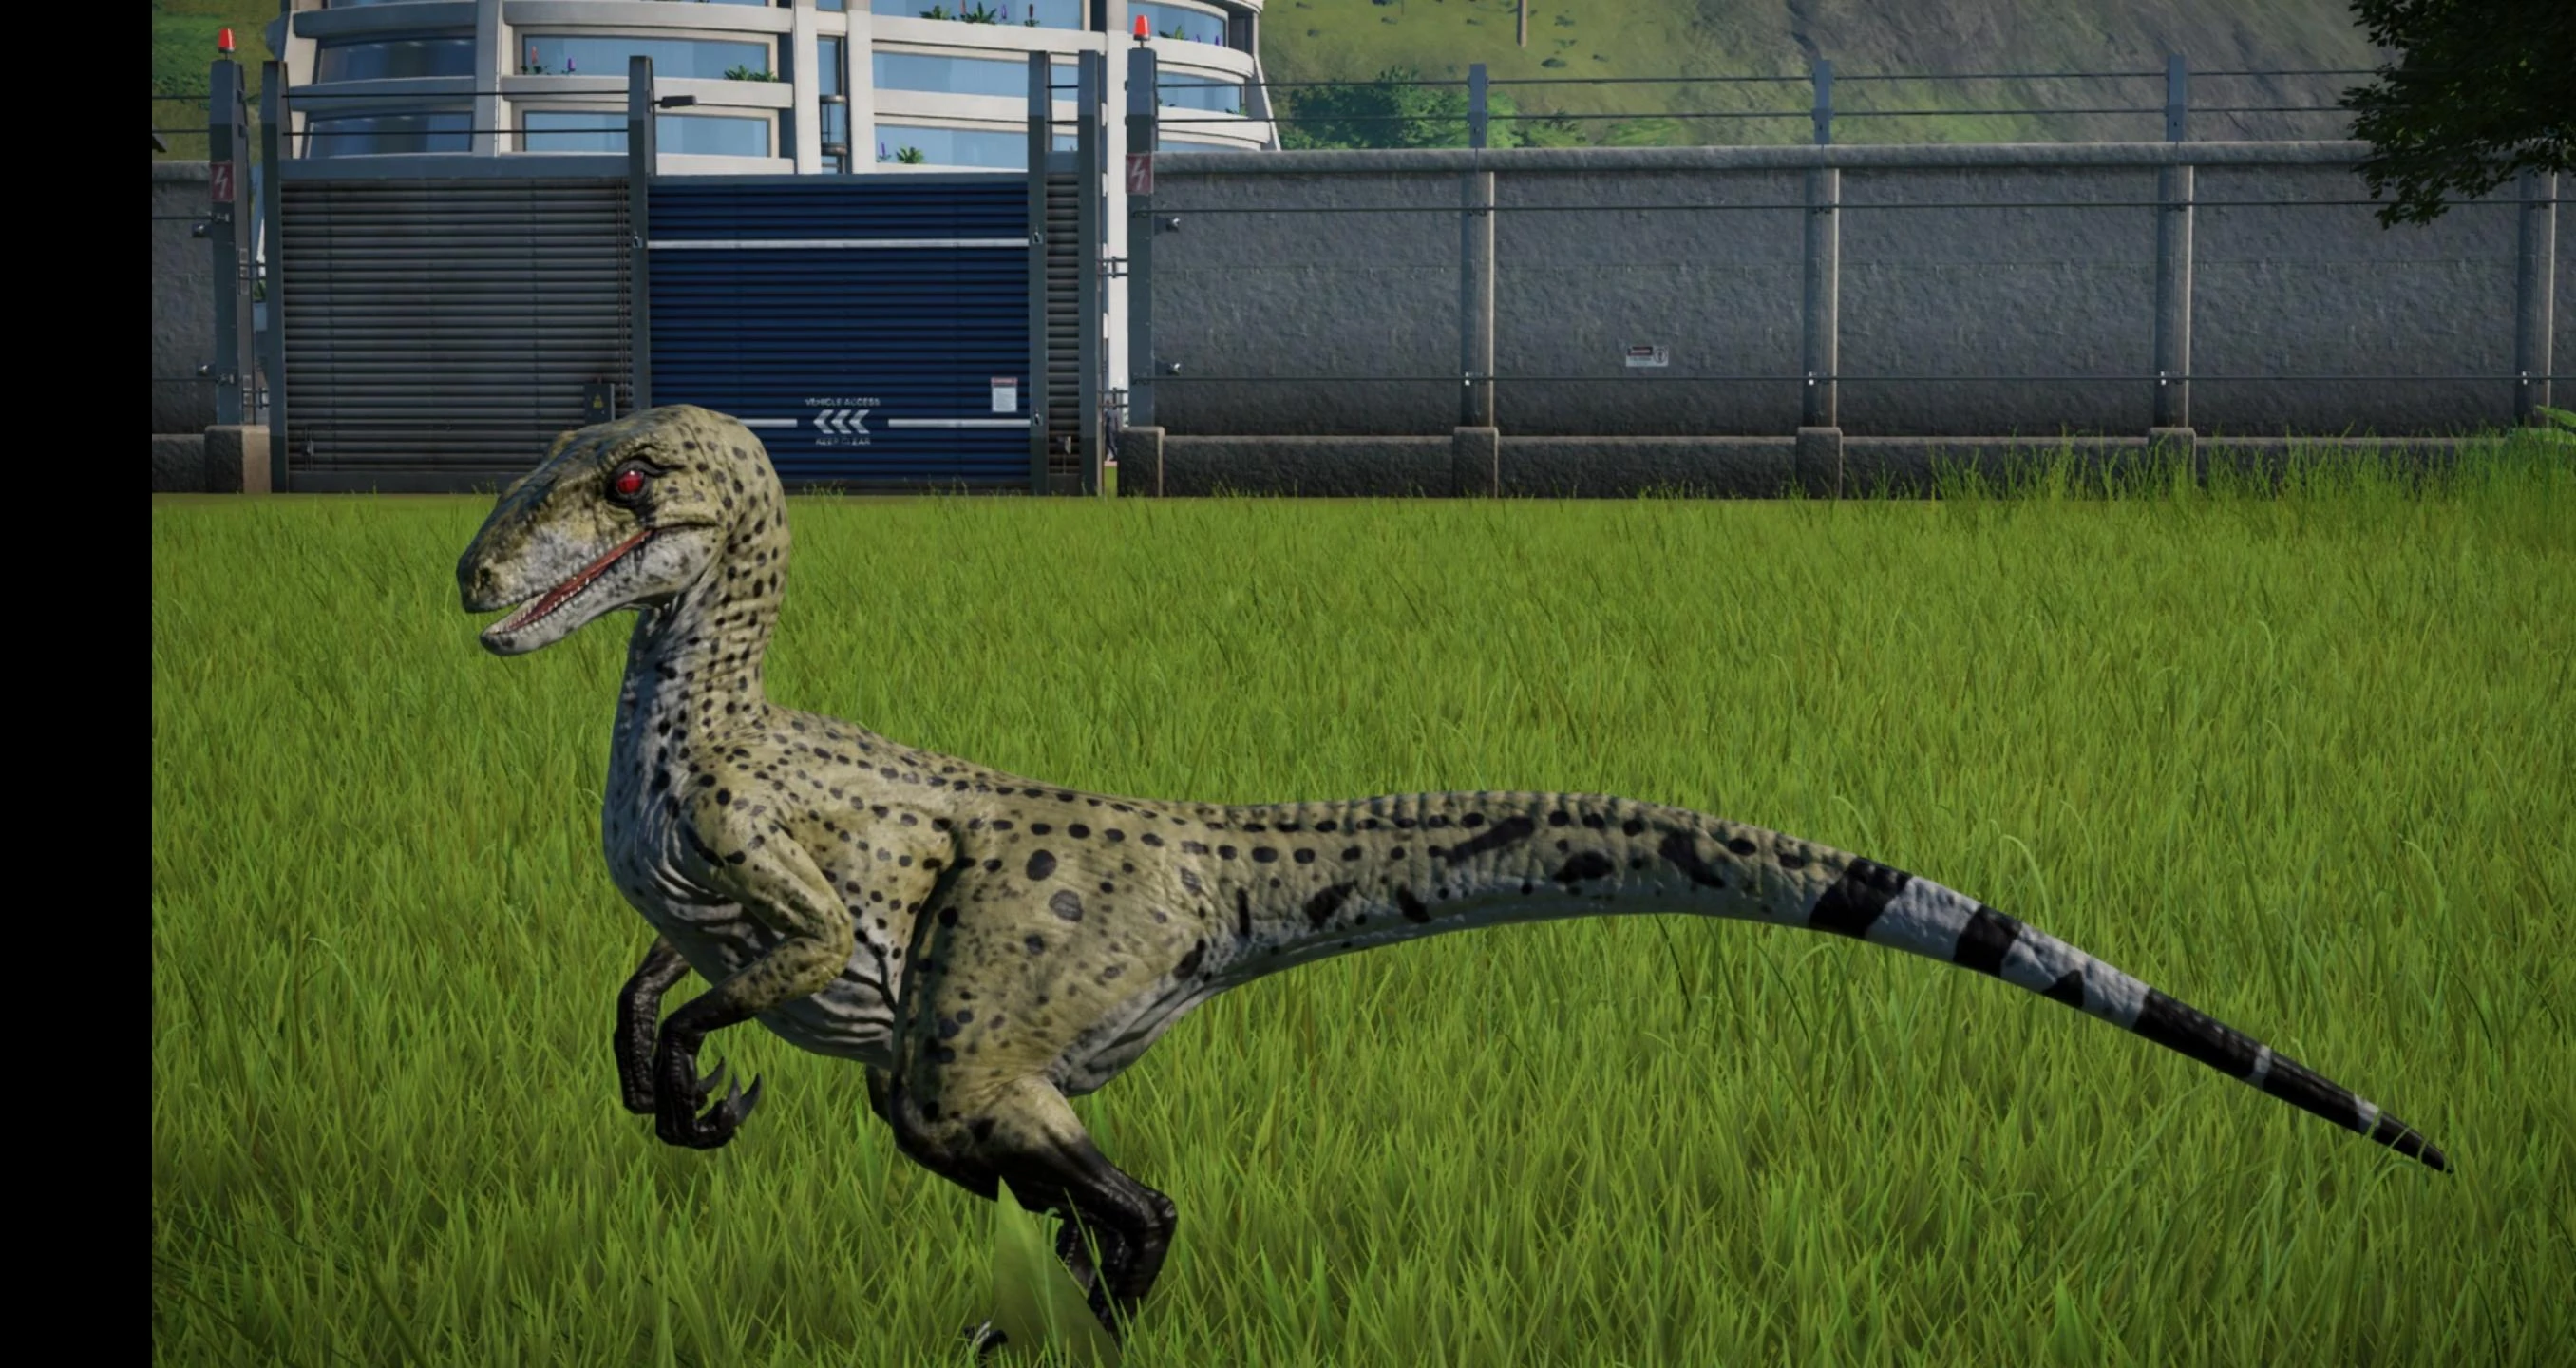 Wwd Utah Raptor Skin For Velociraptor At Jurassic World Evolution Nexus Mods And Community 